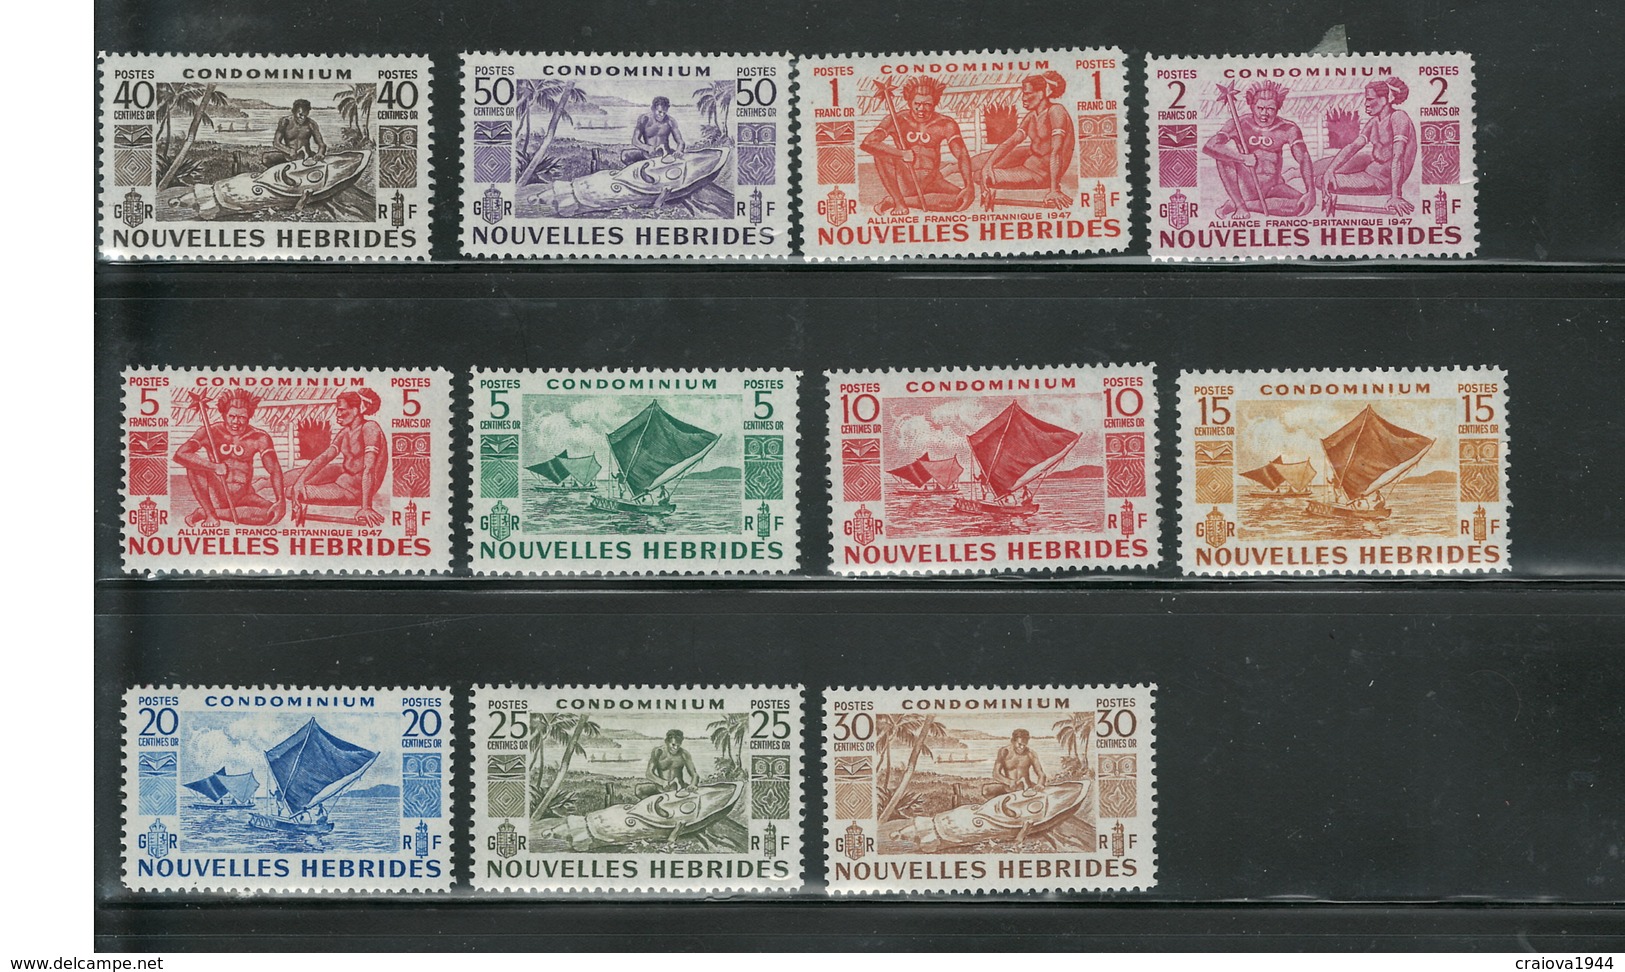 NOUVELLES HEBRIDES 1953 "OCCUPATIONS" #83 - 93 C.V. $73.50 MH - Neufs